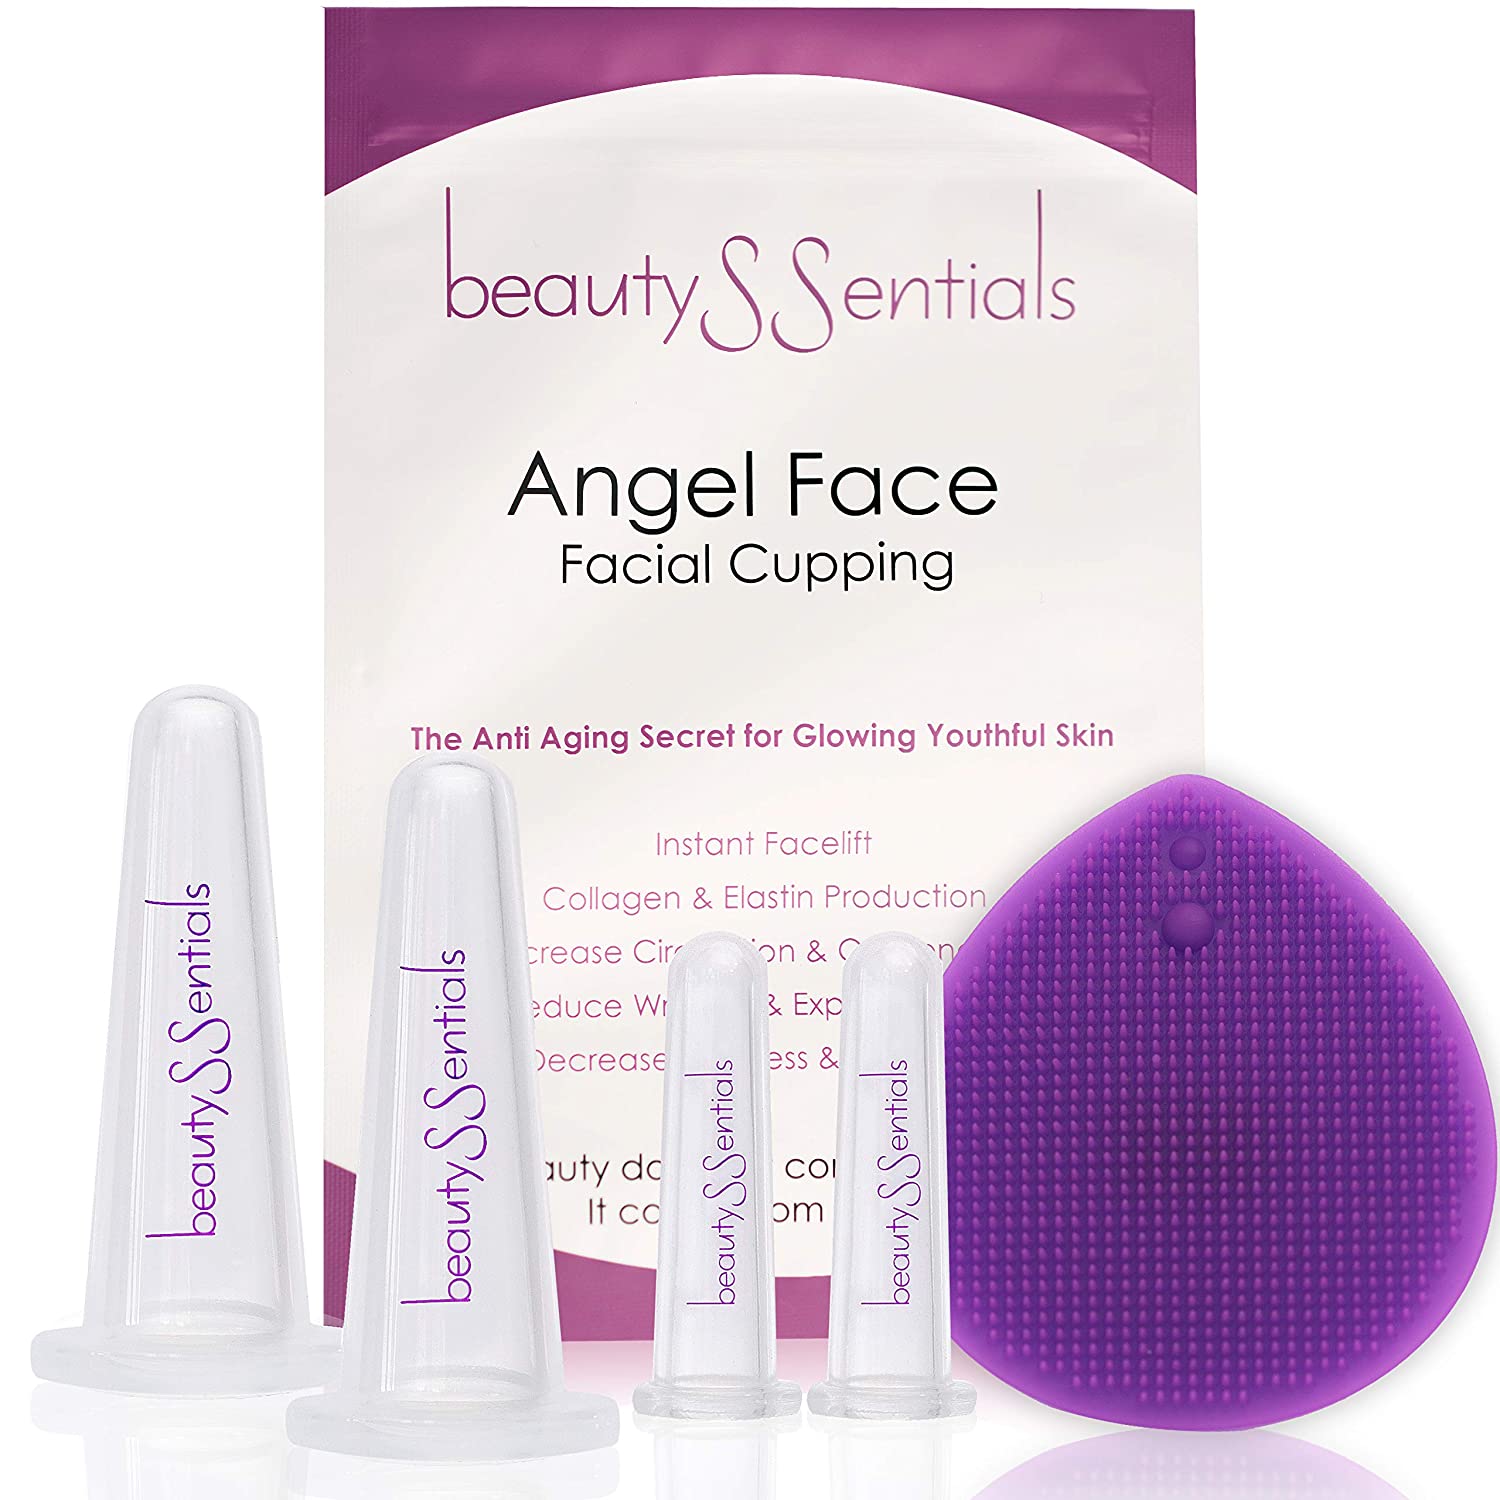 beautySSentials Angel Face Facial Cupping Set